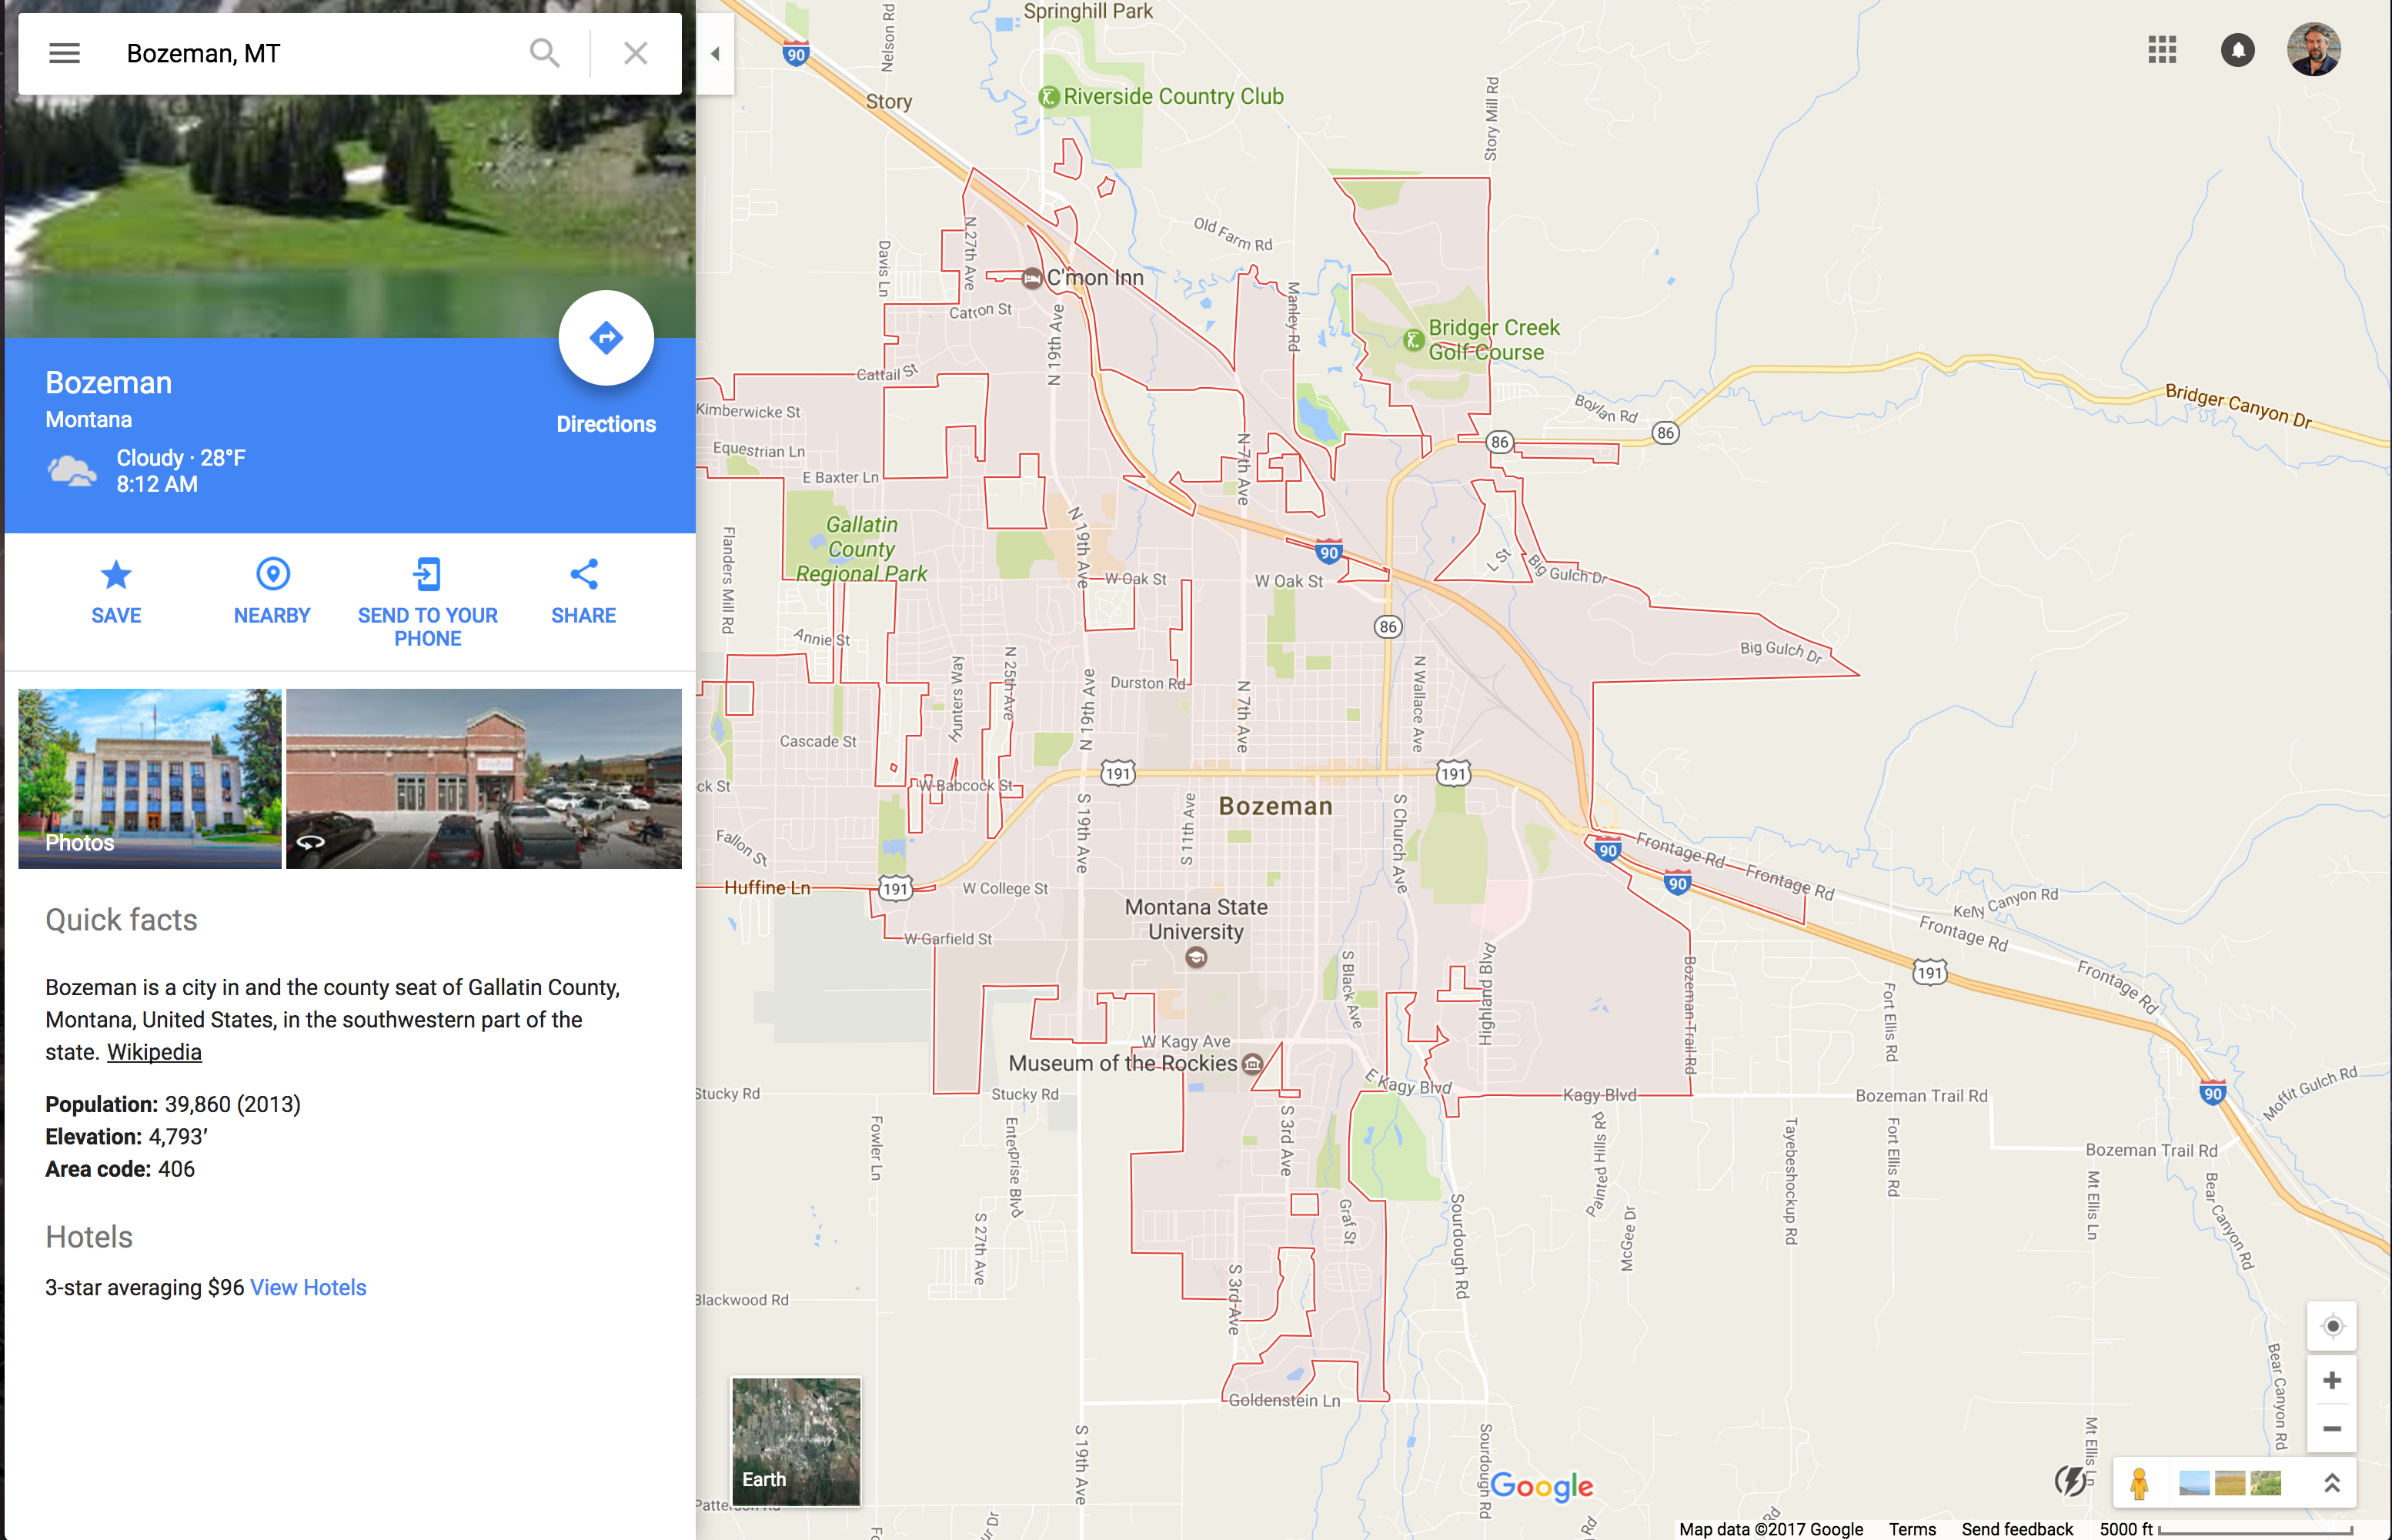 Google Maps Lite